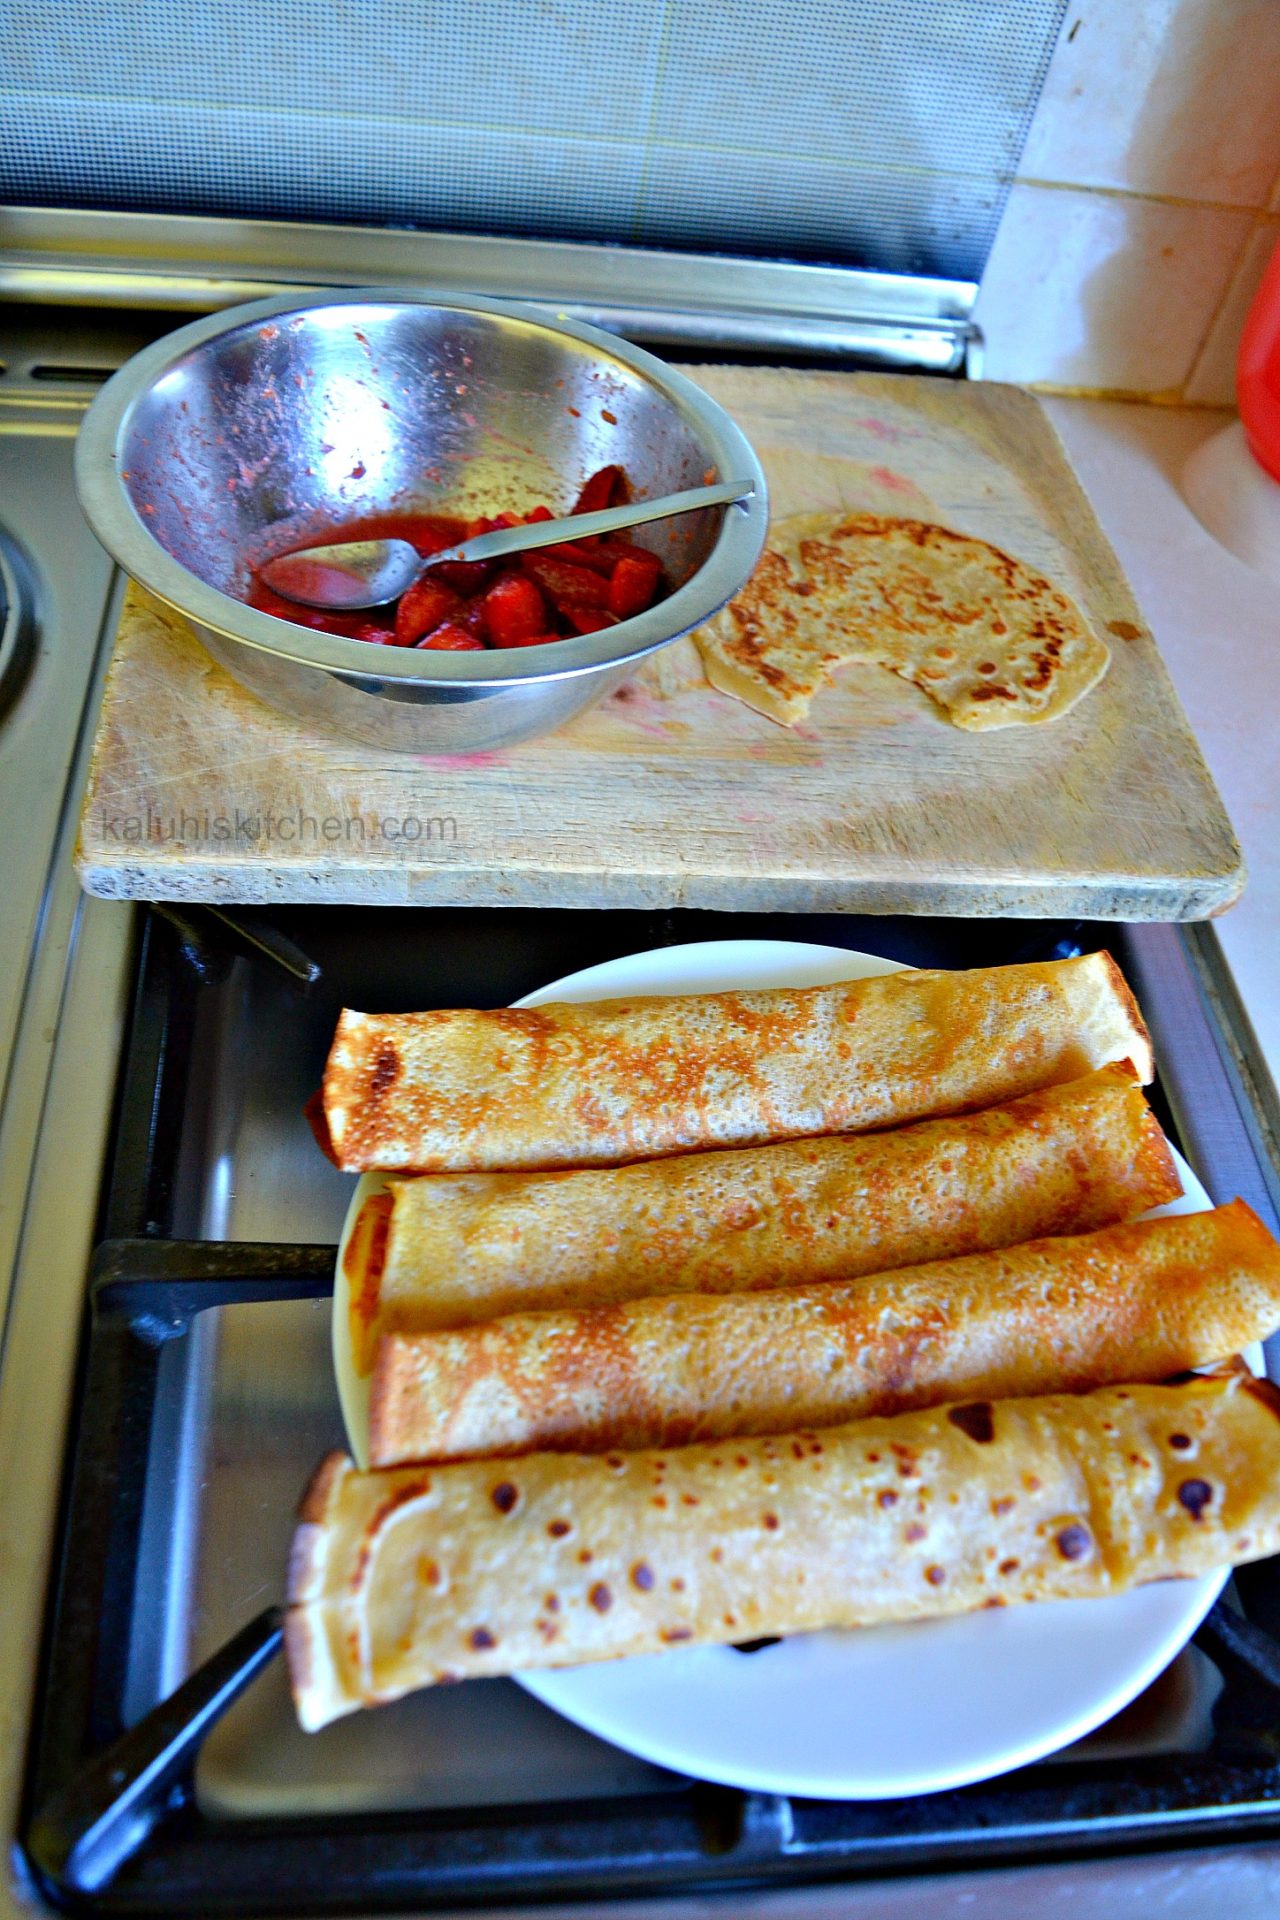 best kenyan food blogs_kenyan food recipes_serve the macerated strawberries with warm pancakes_kaluhiskitchen.com